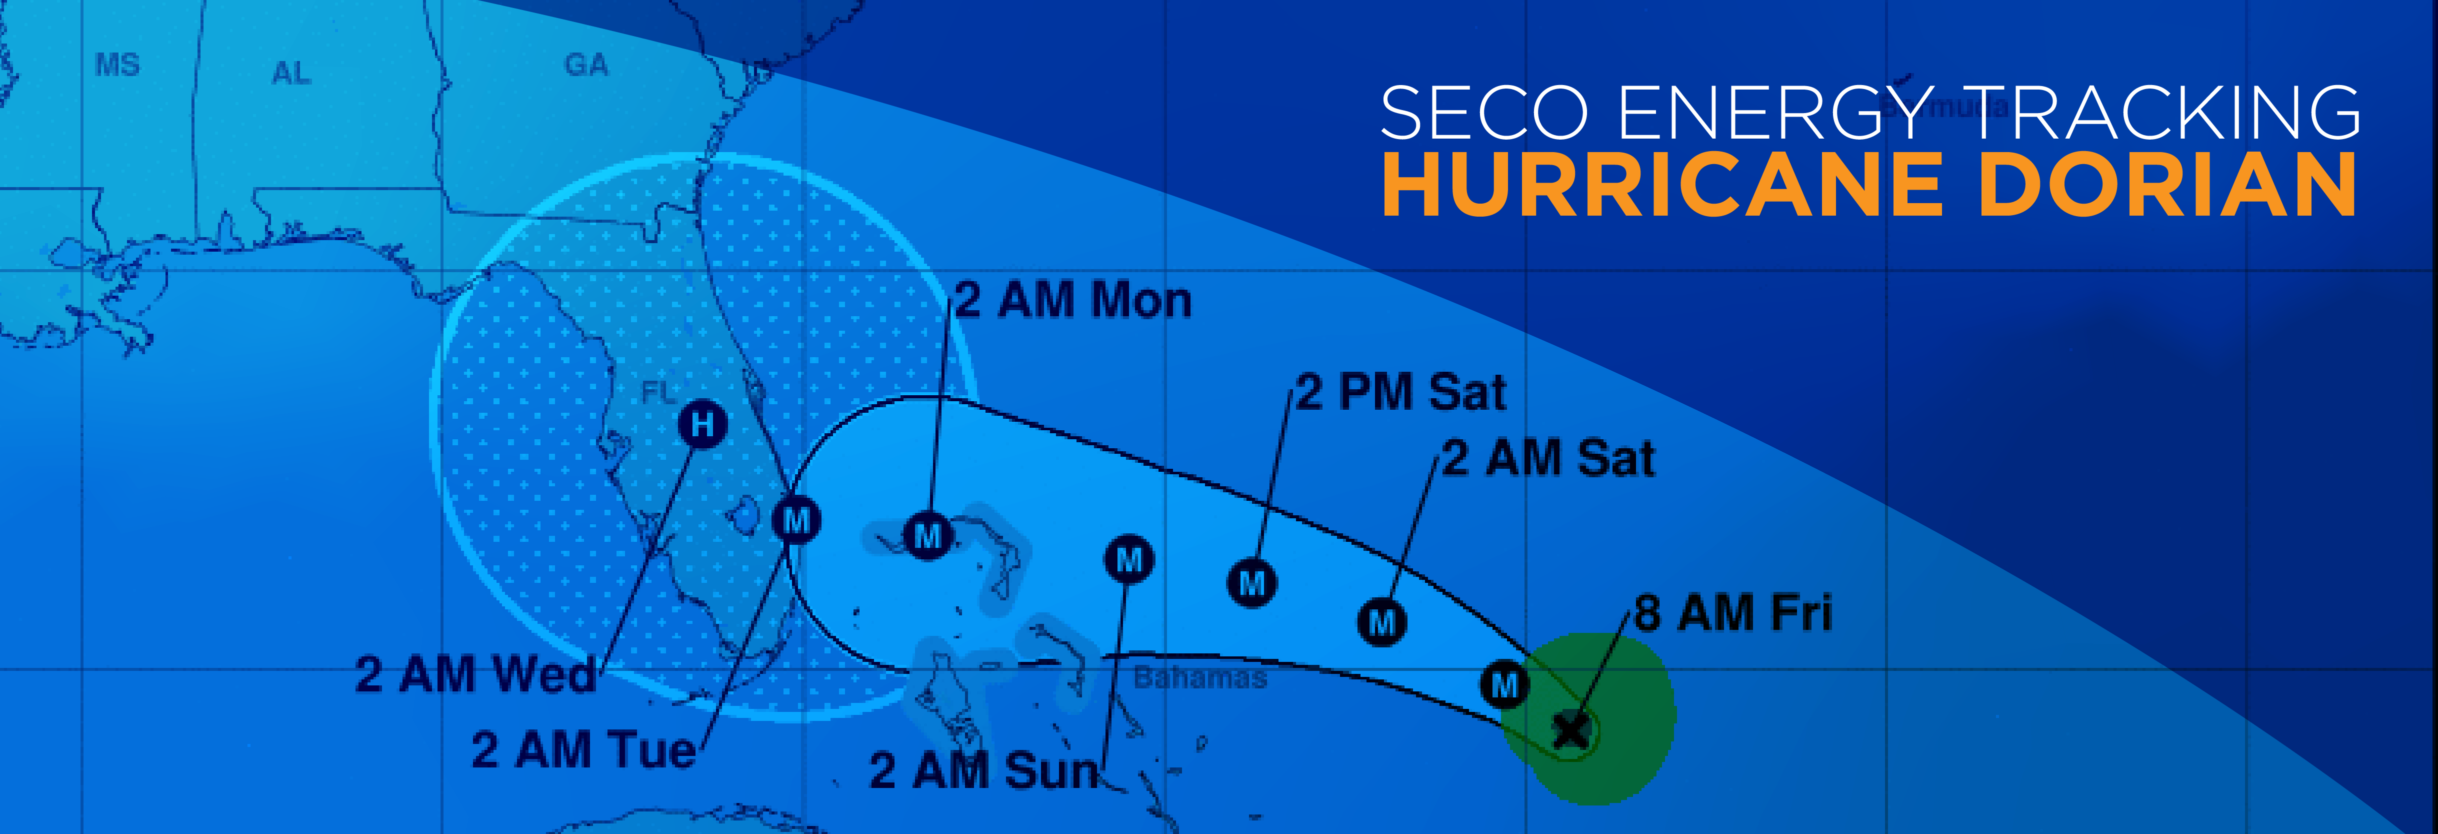 SECO Energy Tracking Hurricane Dorian